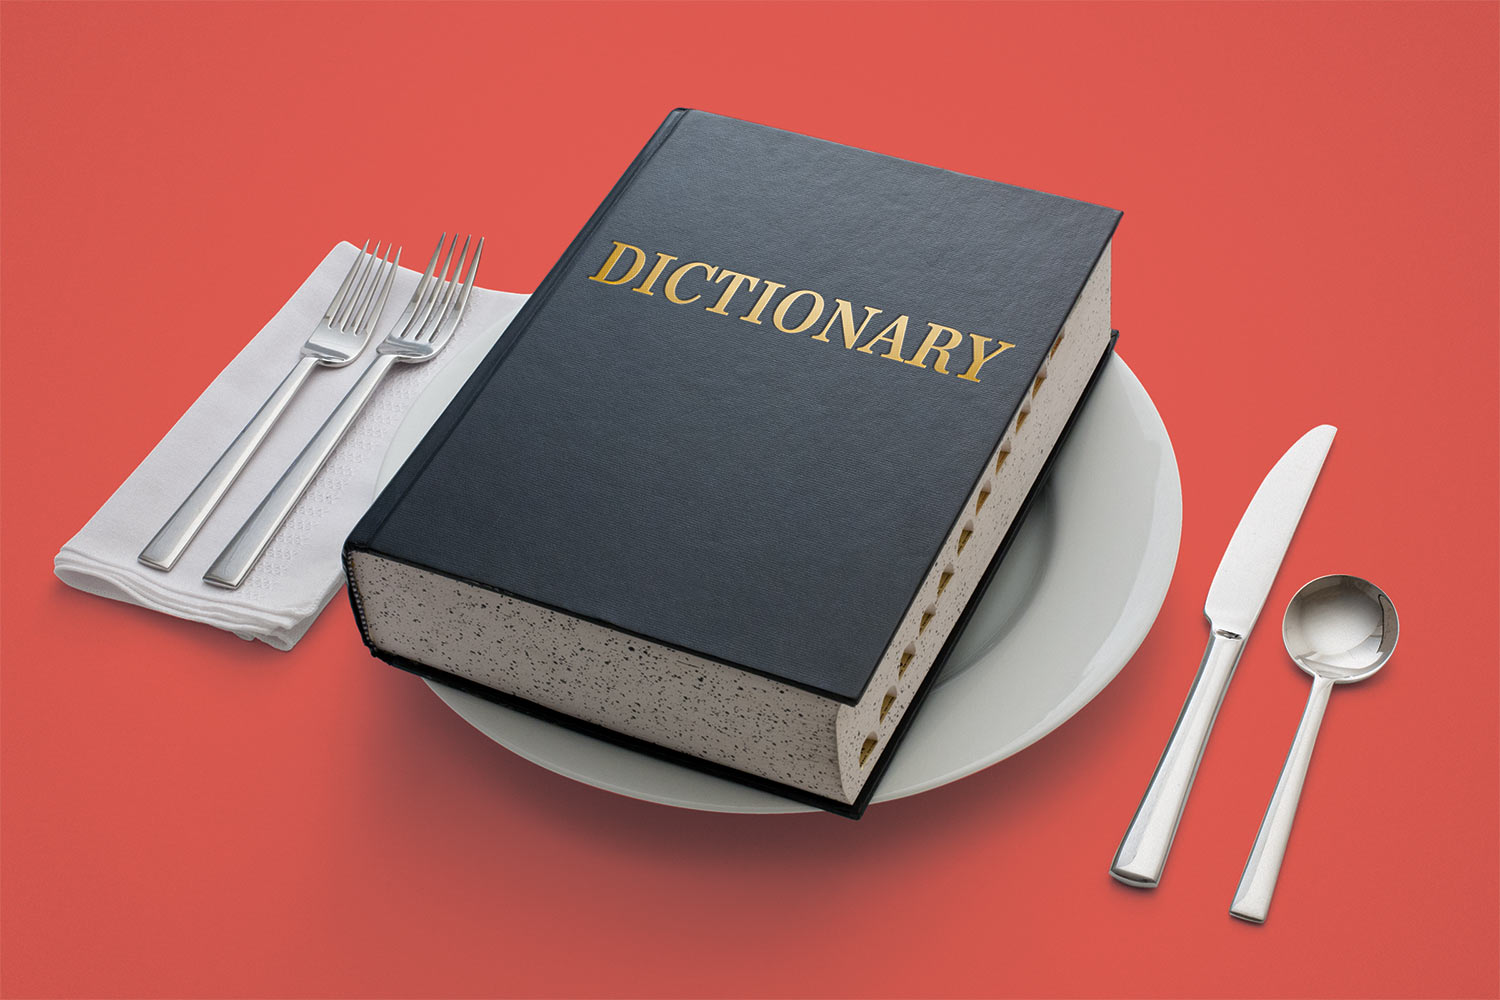   Fine-dining menu verbosity.&nbsp; The Atlantic , Art Director: Elisa Glass  